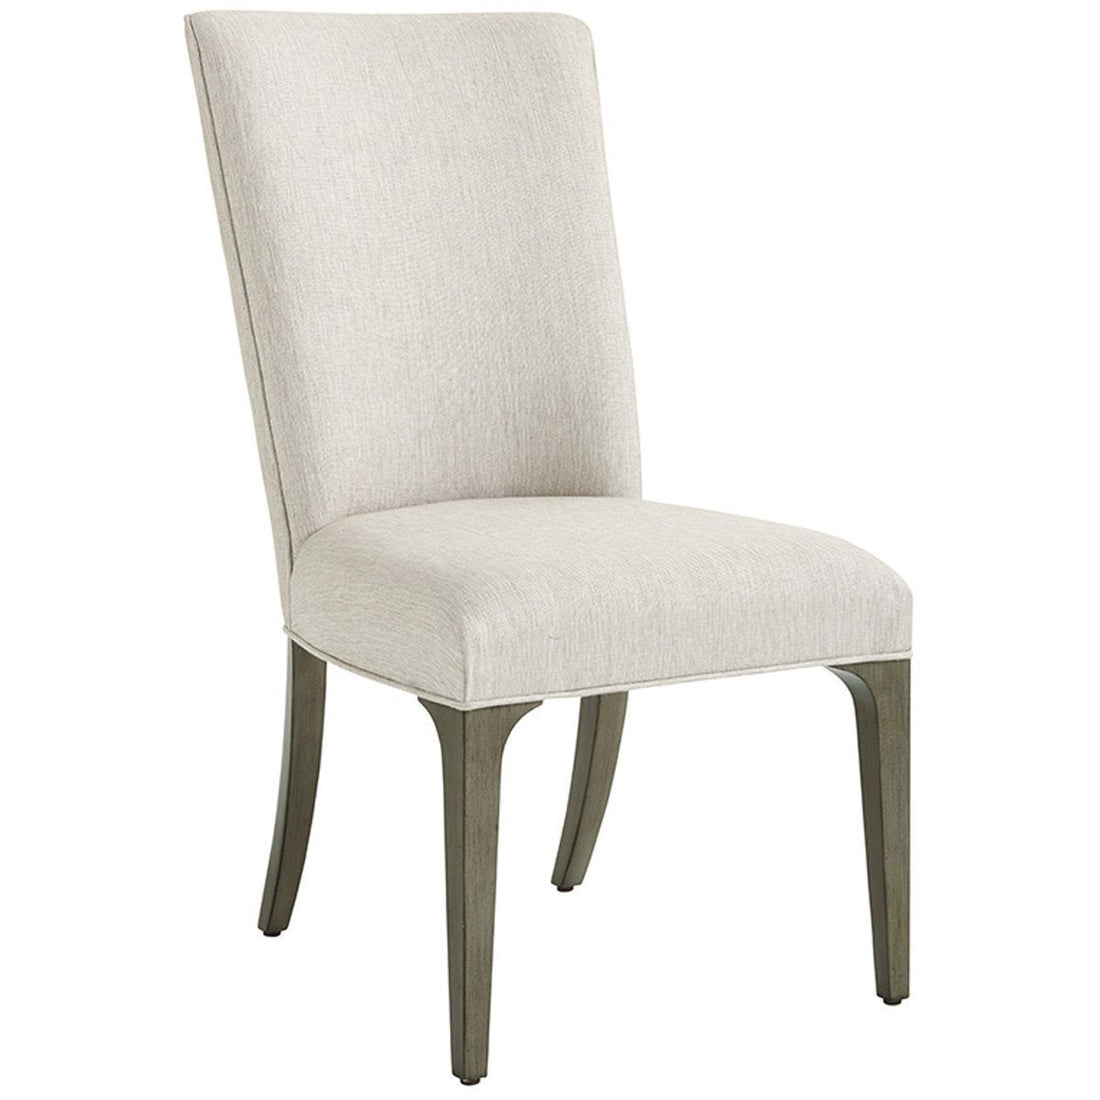 Lexington Ariana Bellamy Upholstered Side Chair